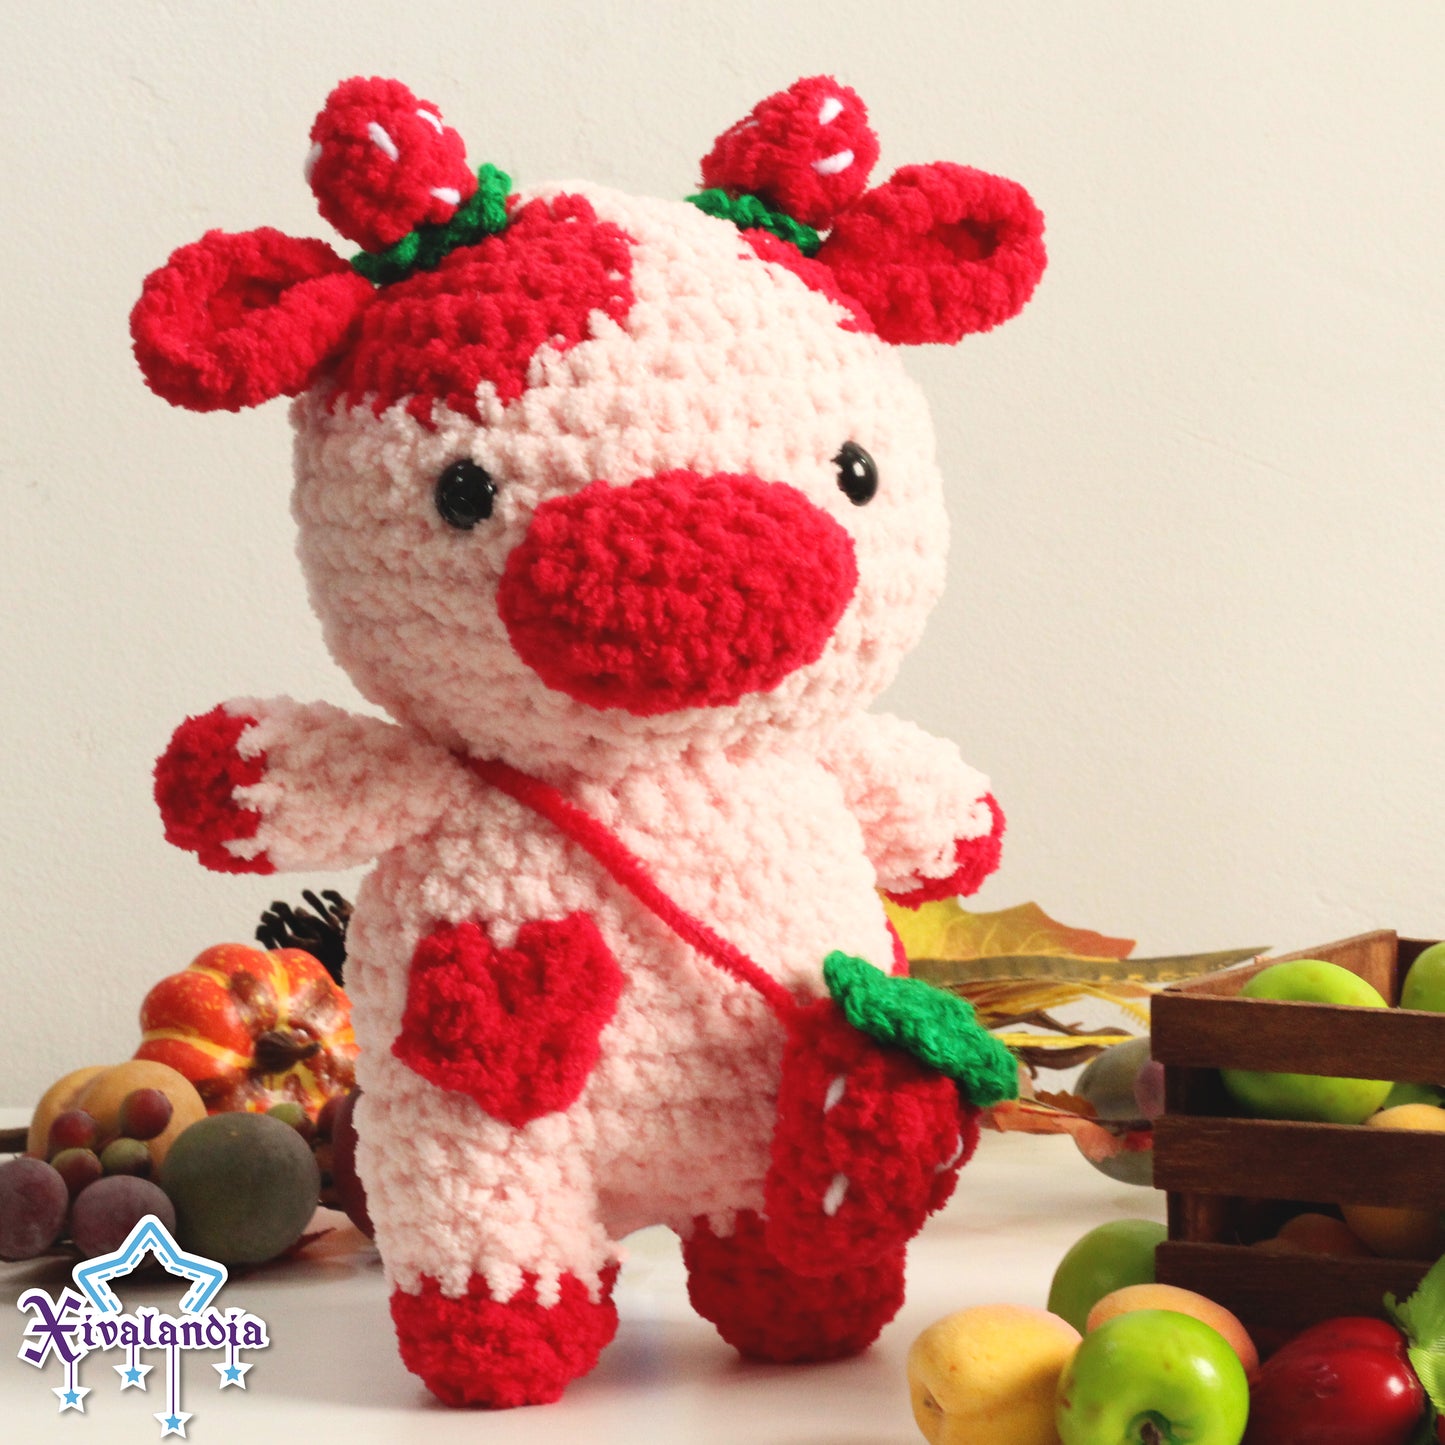 Plush Yarn Crochet for Amigurumi